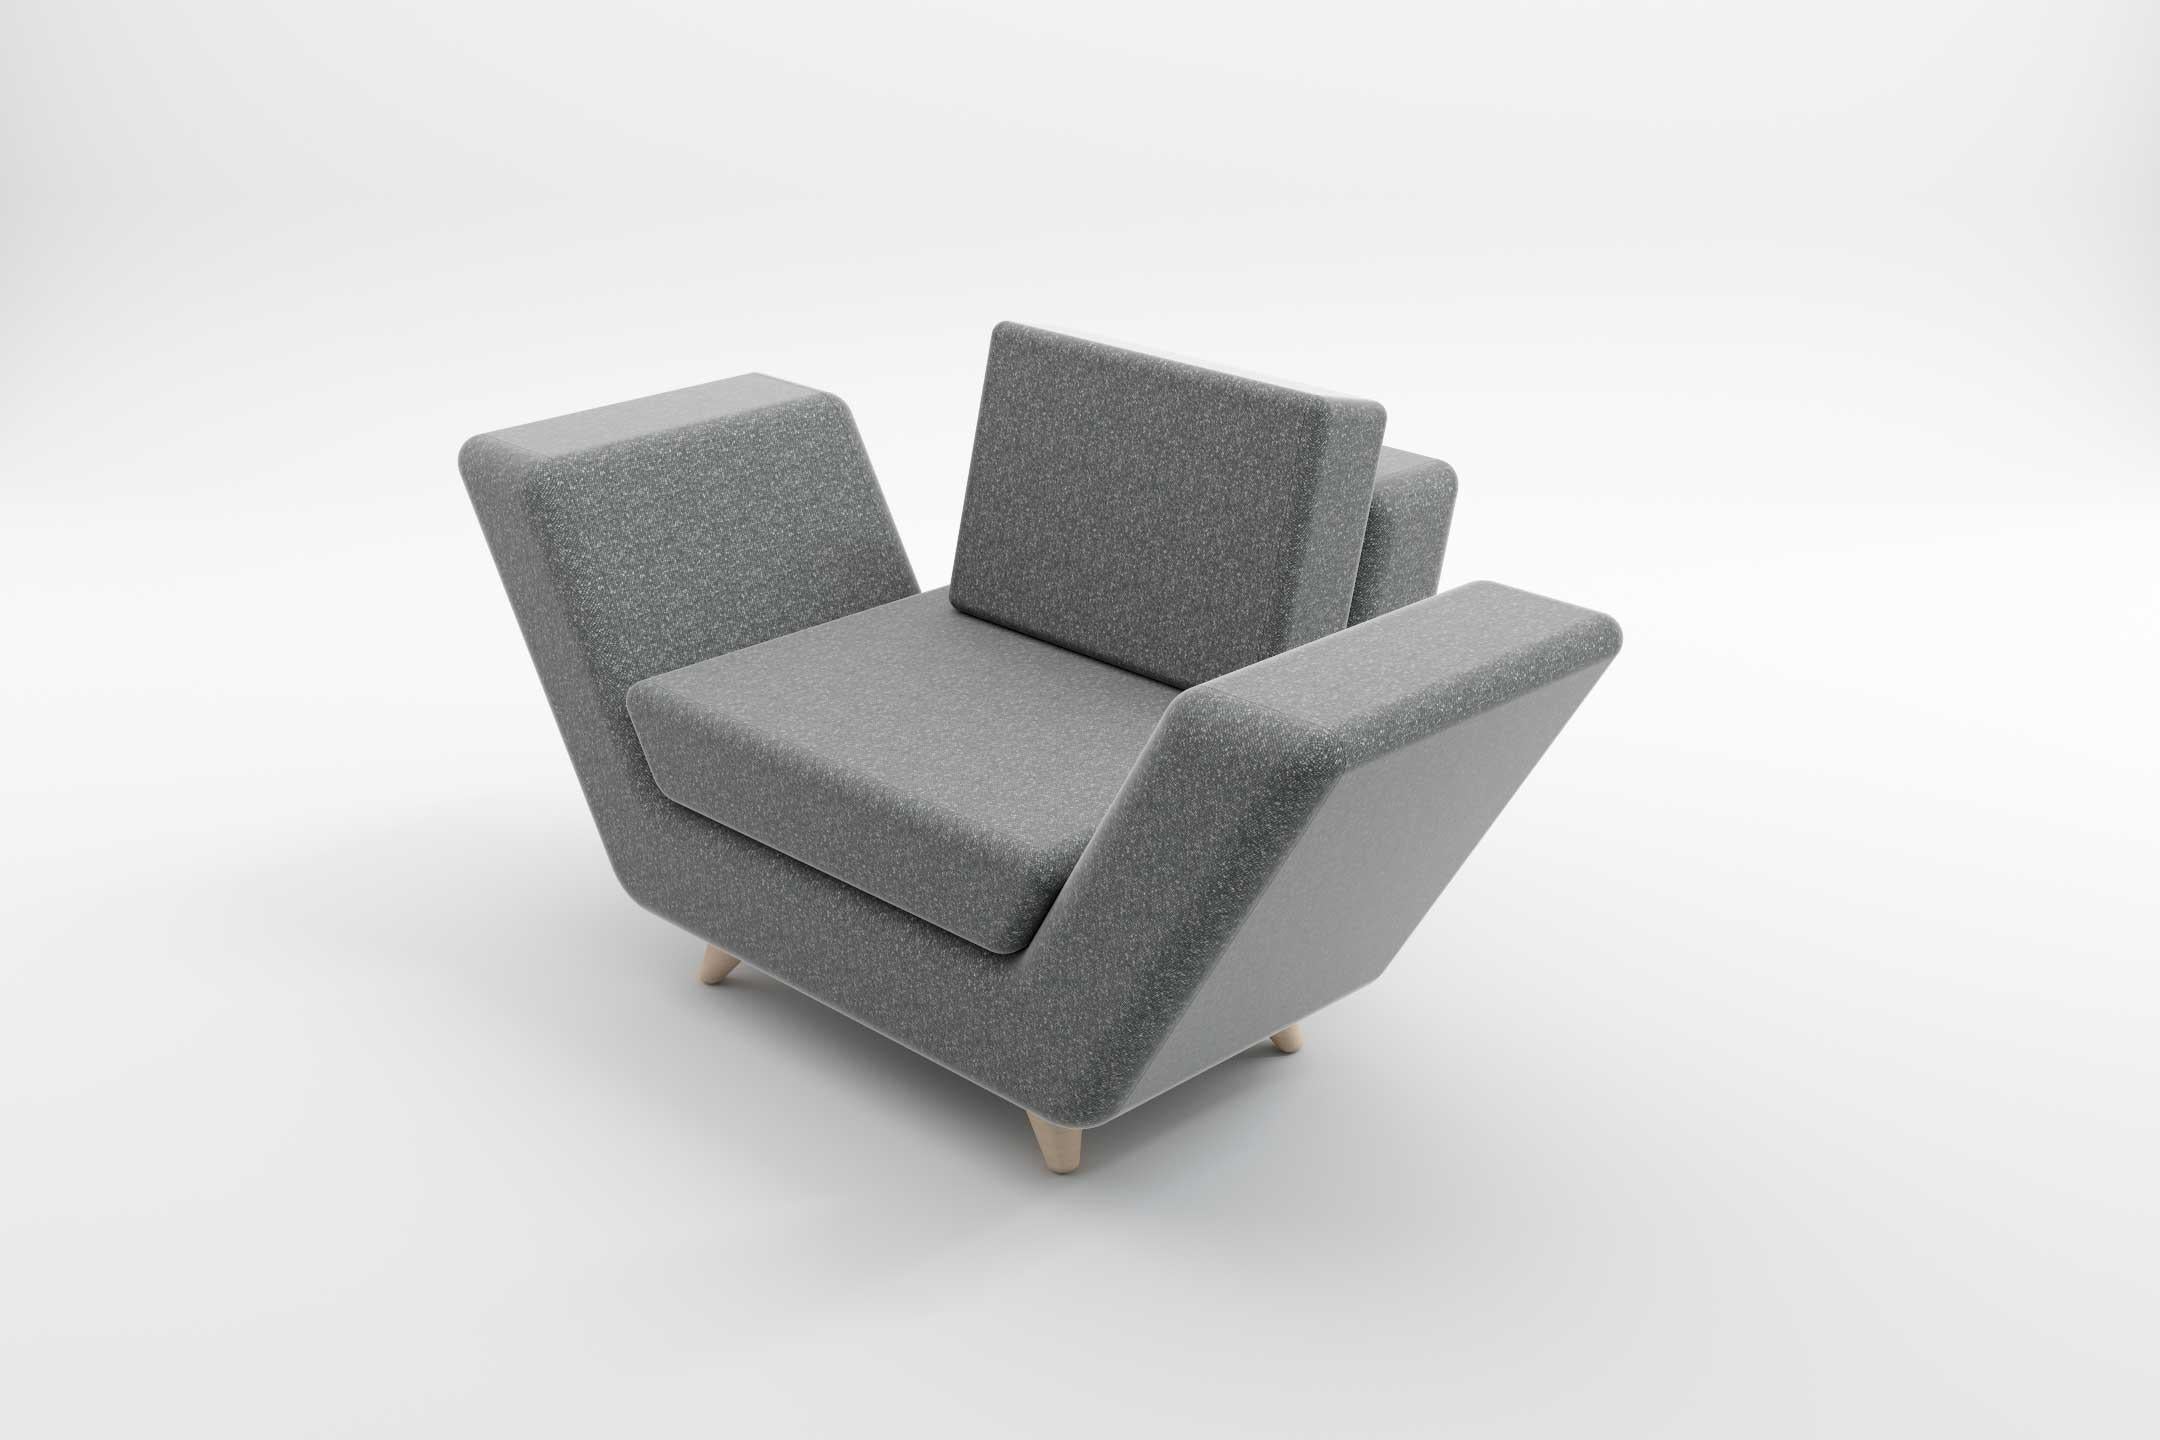 European Apex Armchair - Modern Scandinavian Armchair with Wooden Legs For Sale